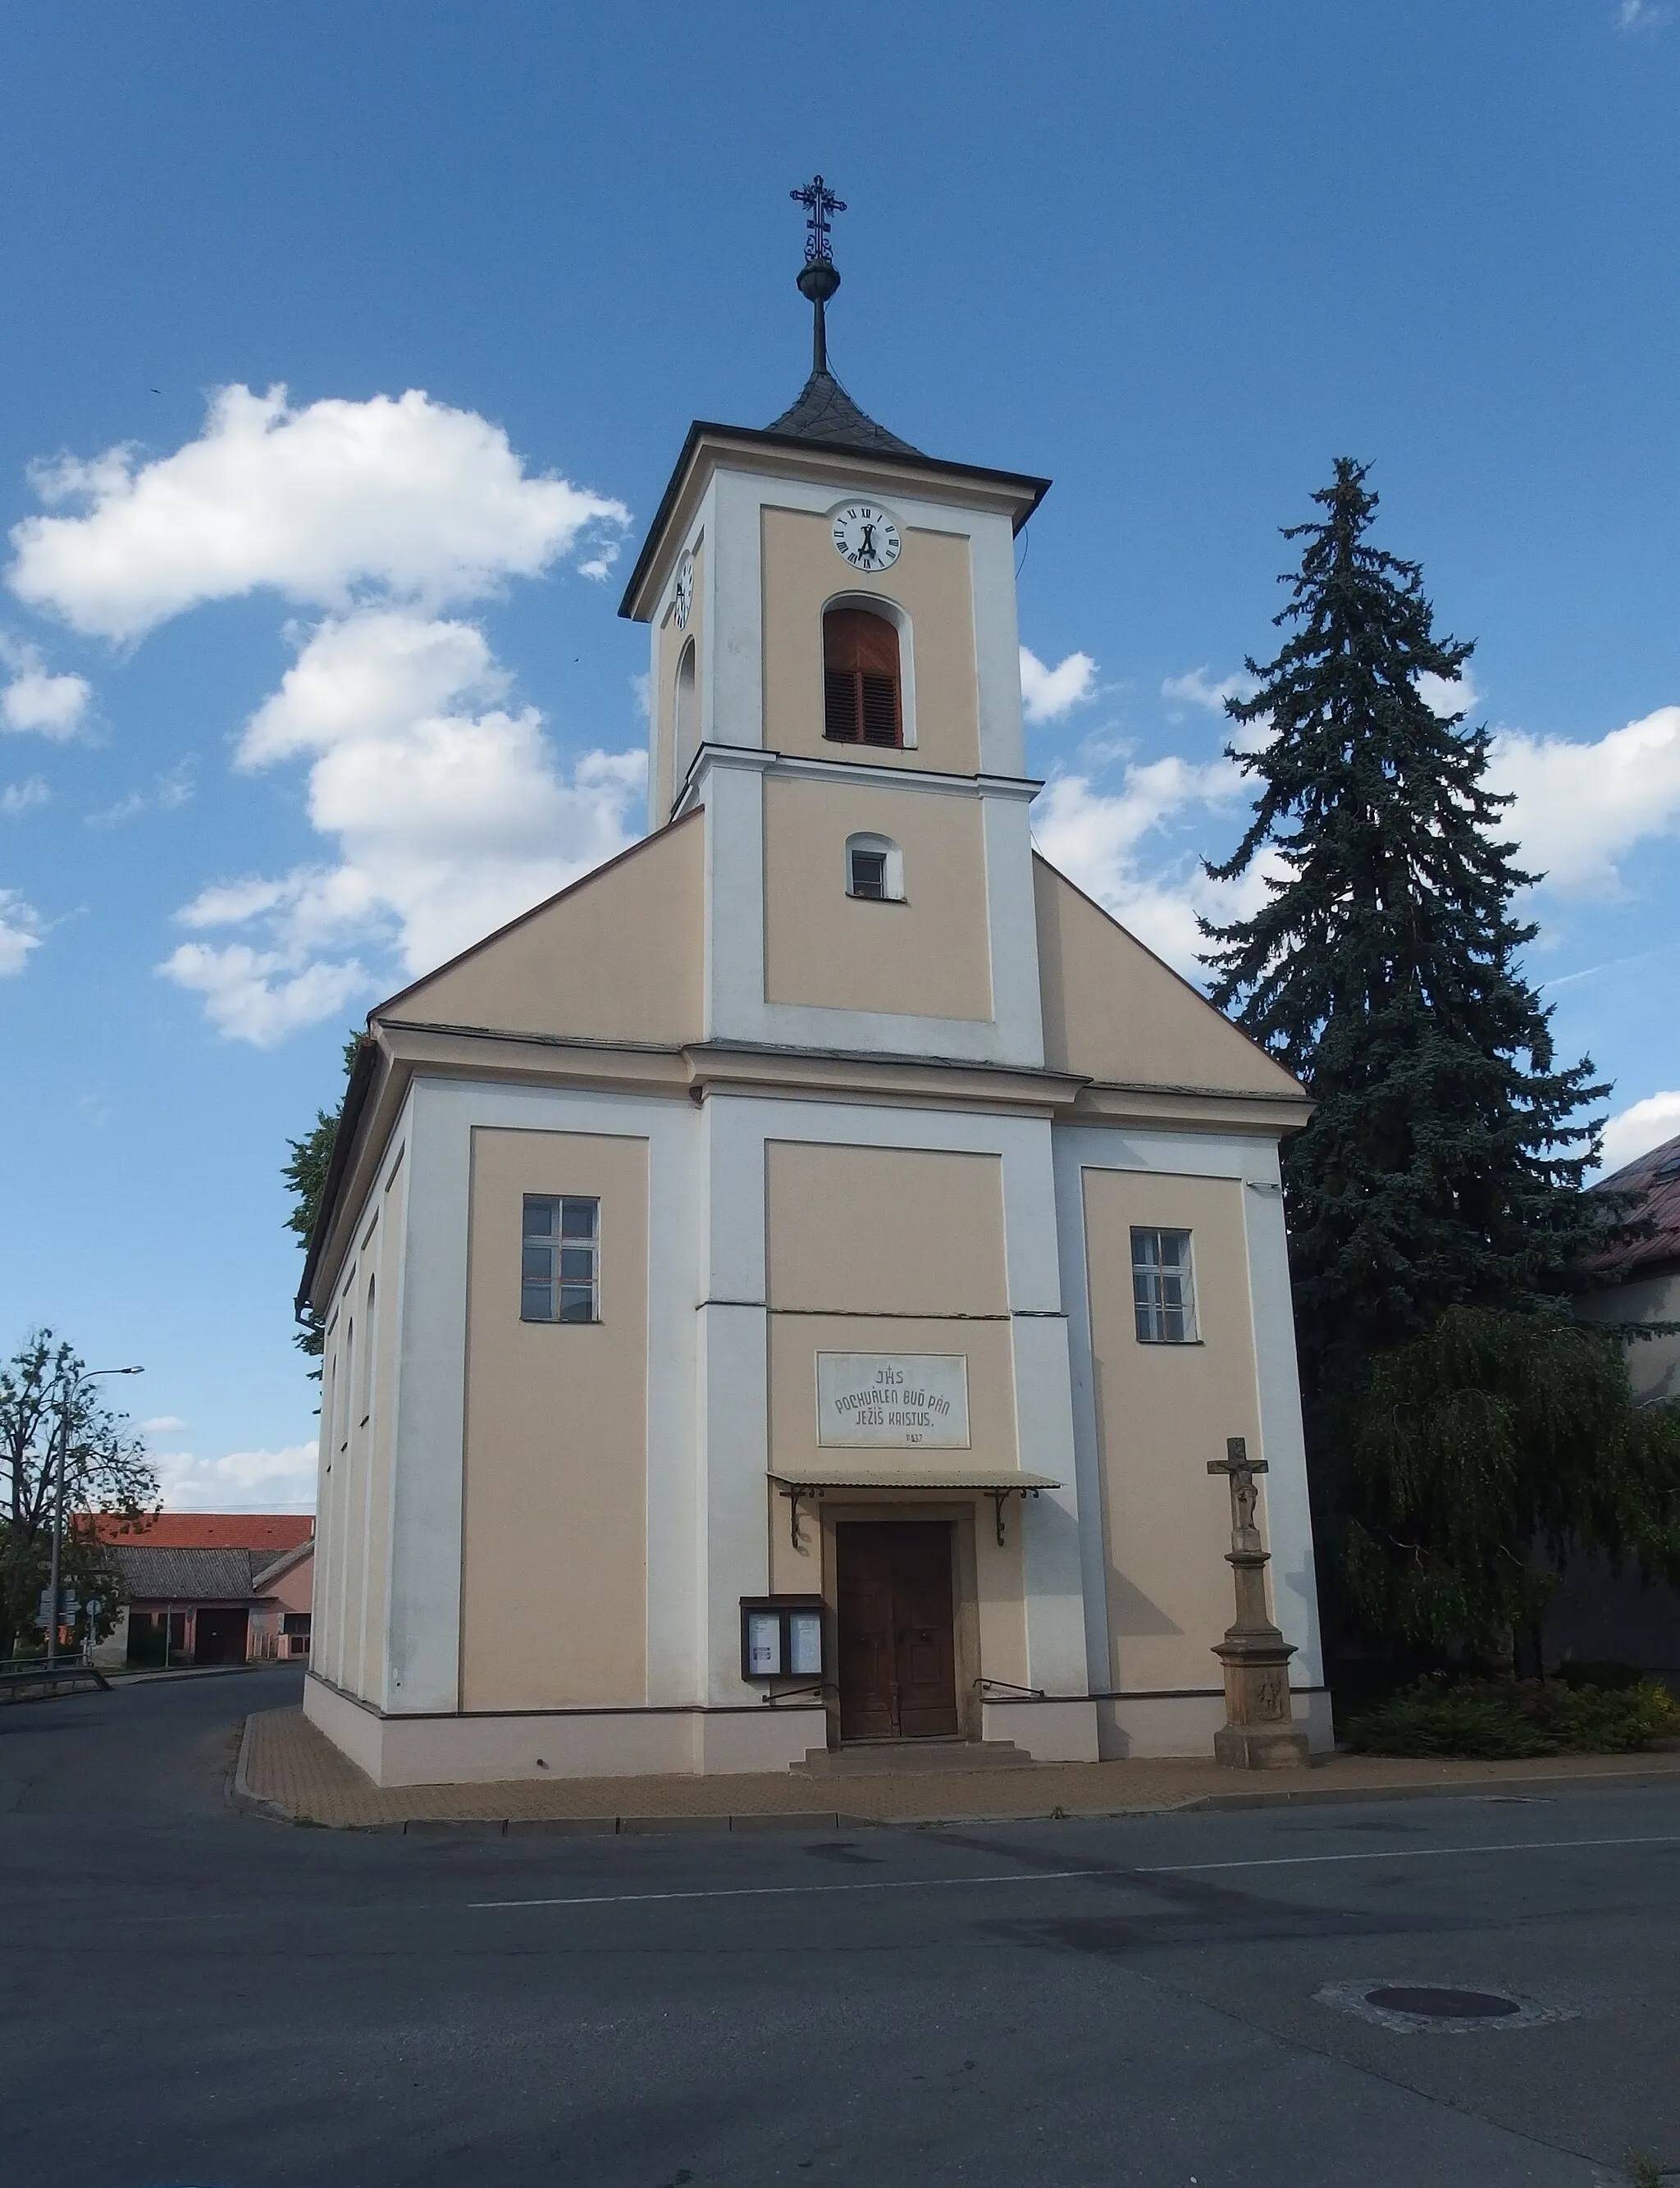 Photo showing: Troubelice, Olomouc District, Czechia.